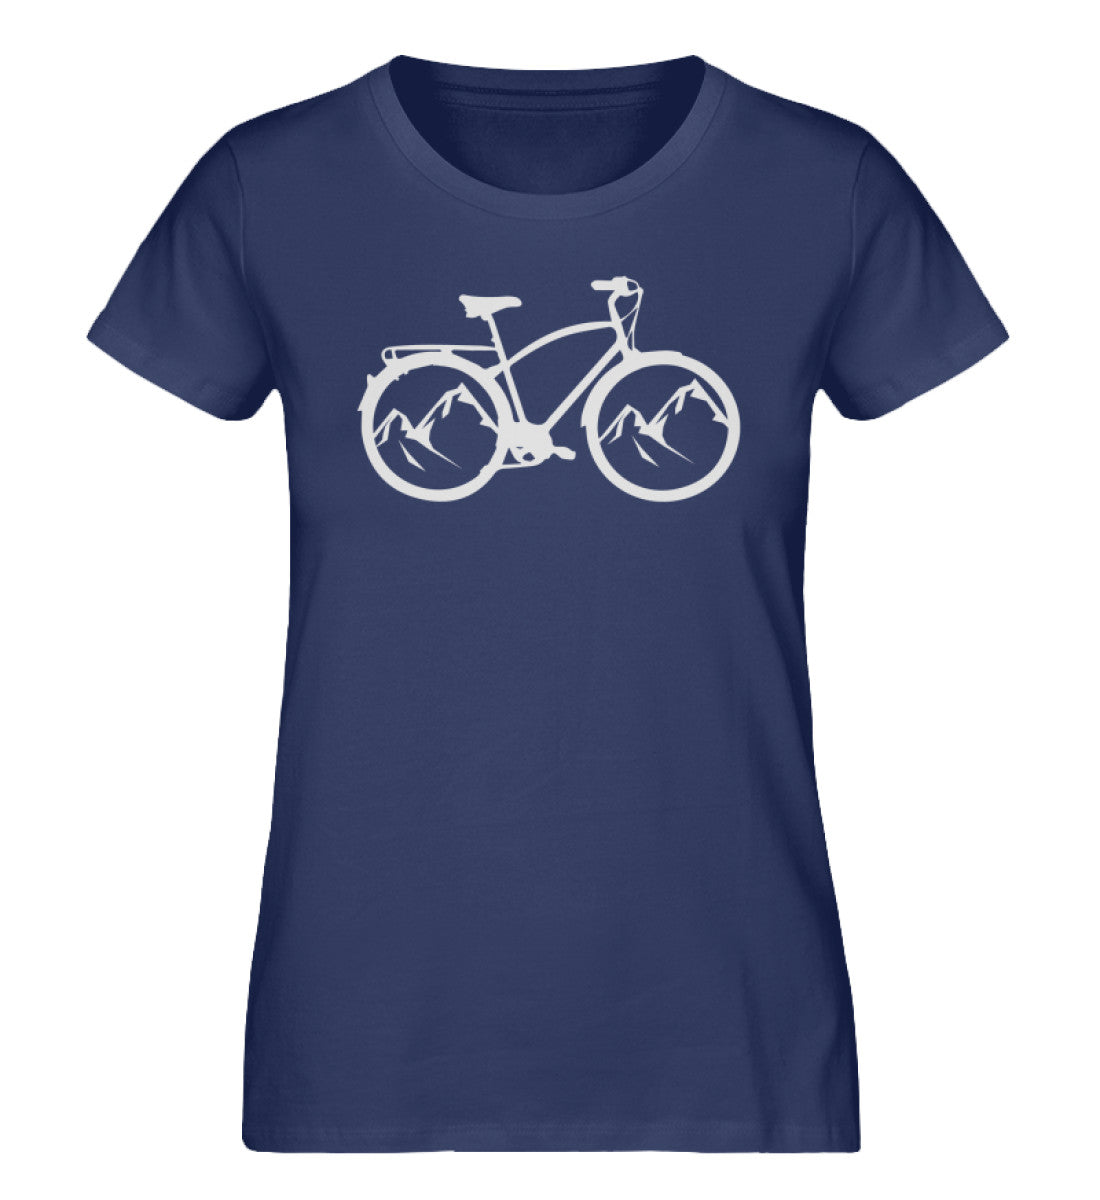 Bergräder - Damen Organic T-Shirt fahrrad mountainbike Navyblau